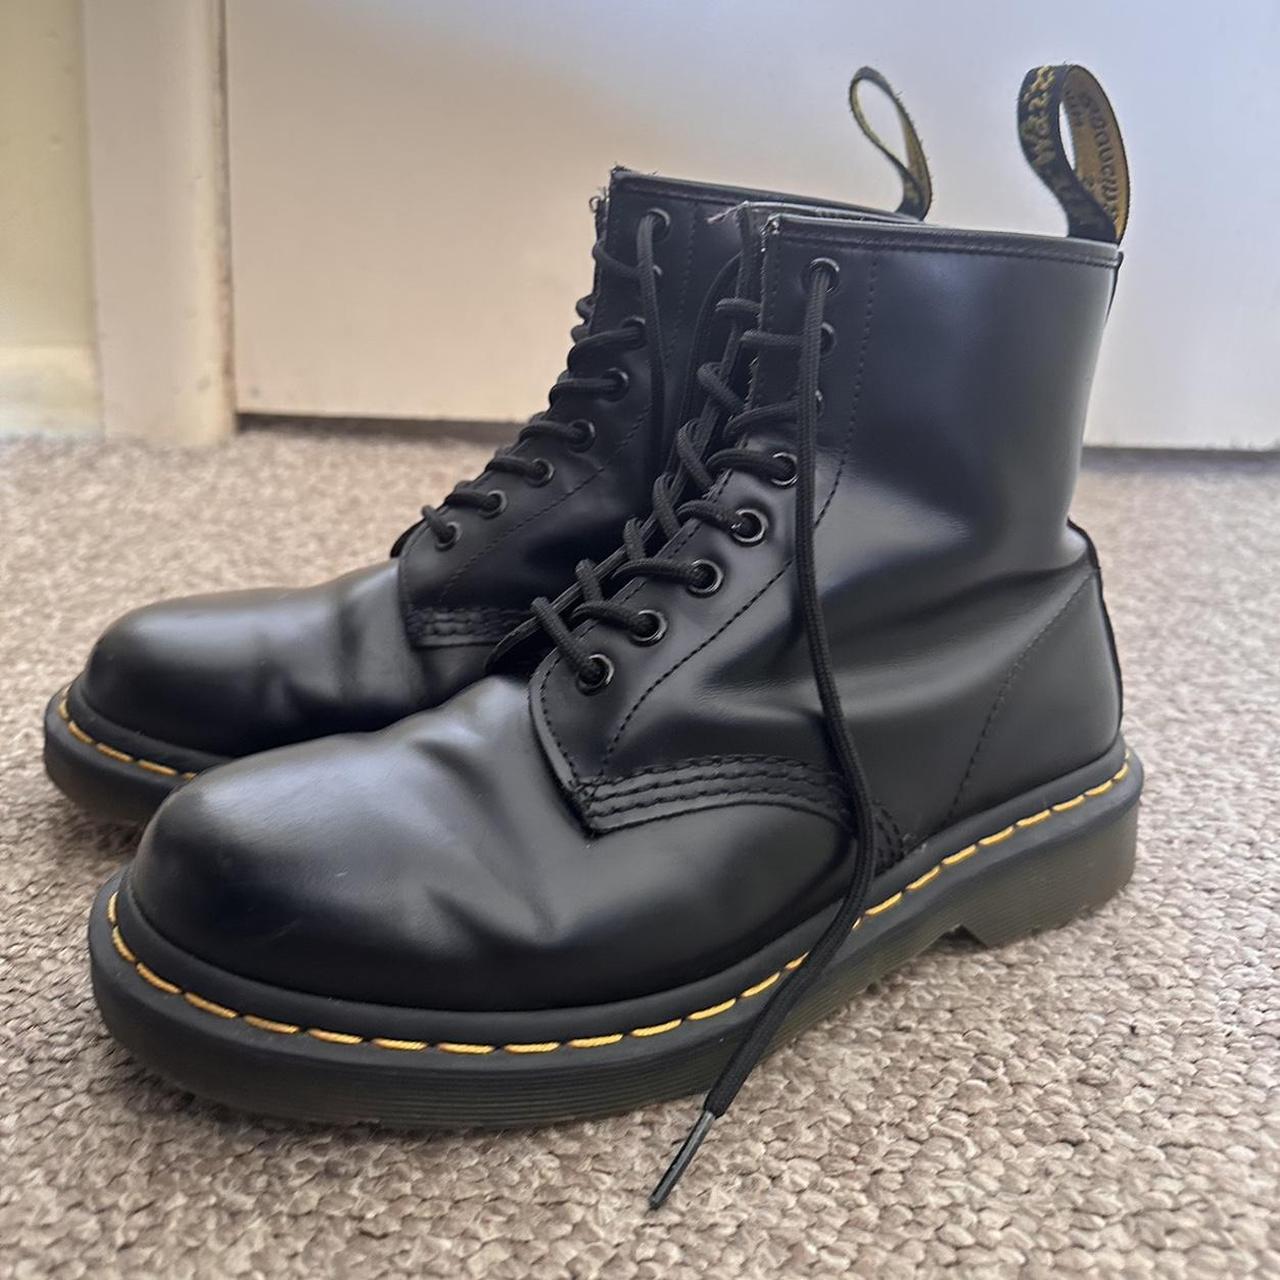 Doc Martin 1460 Boots - Size UK6/US7 (box... - Depop